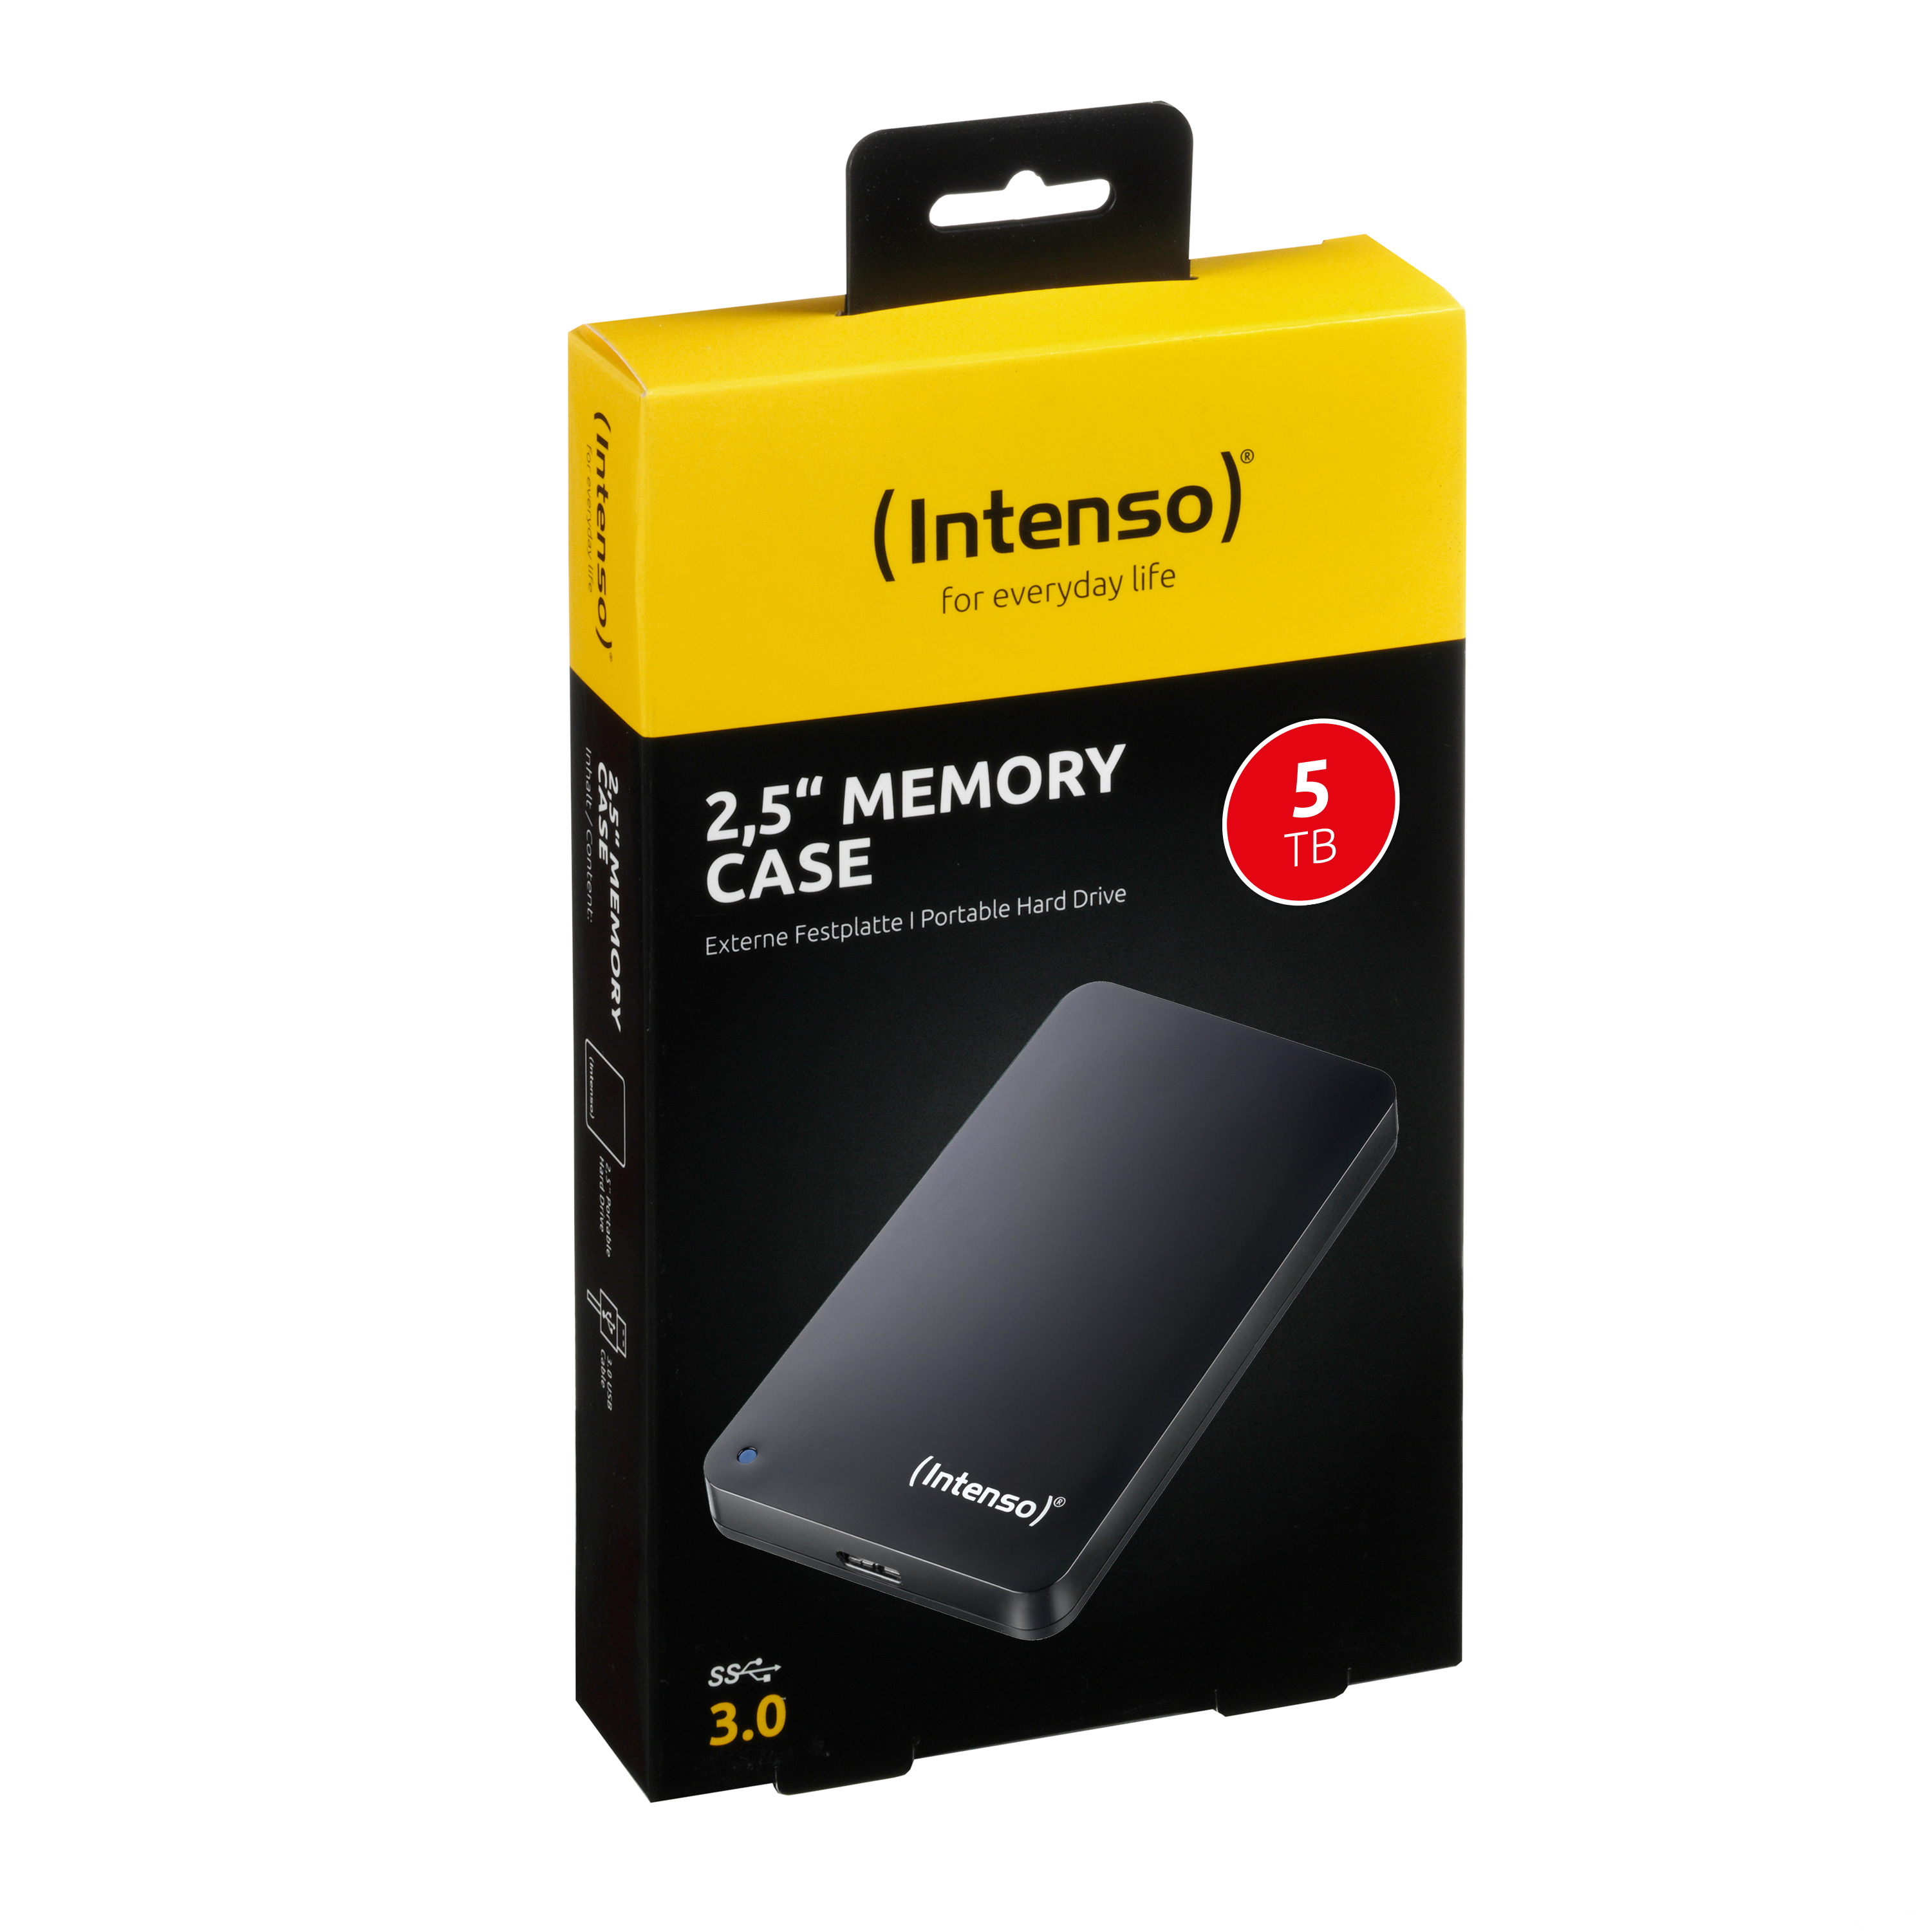 INTENSO Memory Case TB, 5 TB extern, HDD, Schwarz 2,5 Zoll, 5